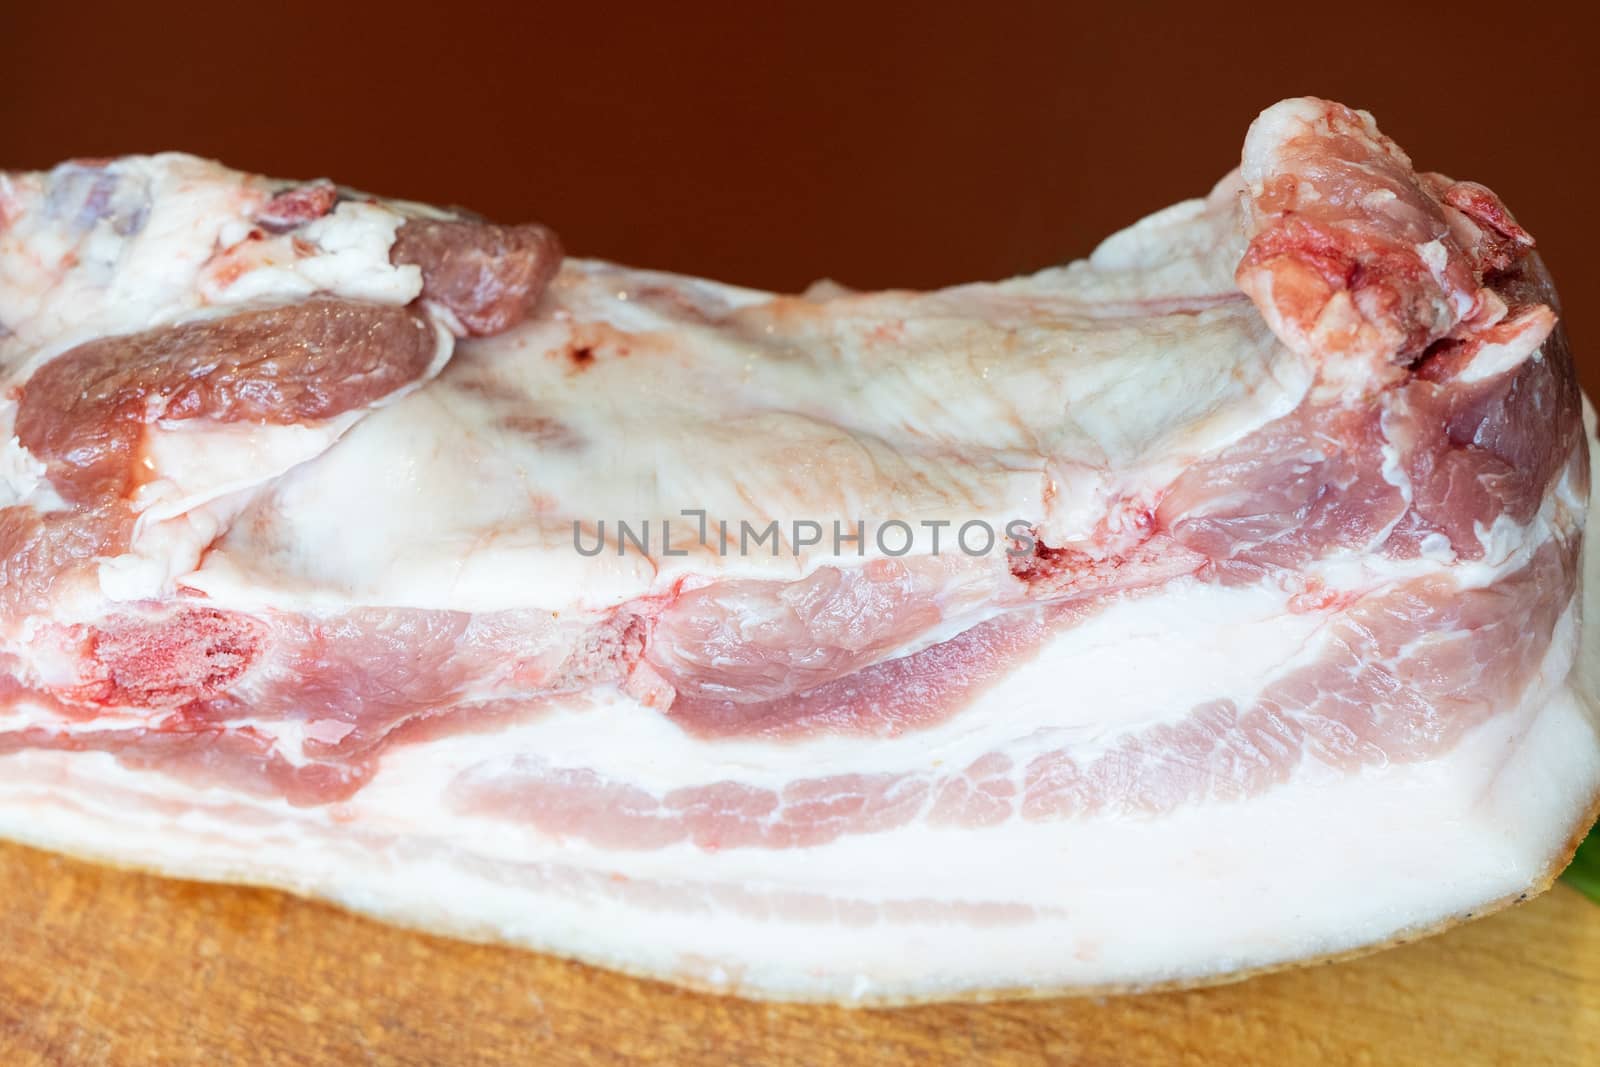 a large piece of raw pork fat germinated with meat by Serhii_Voroshchuk